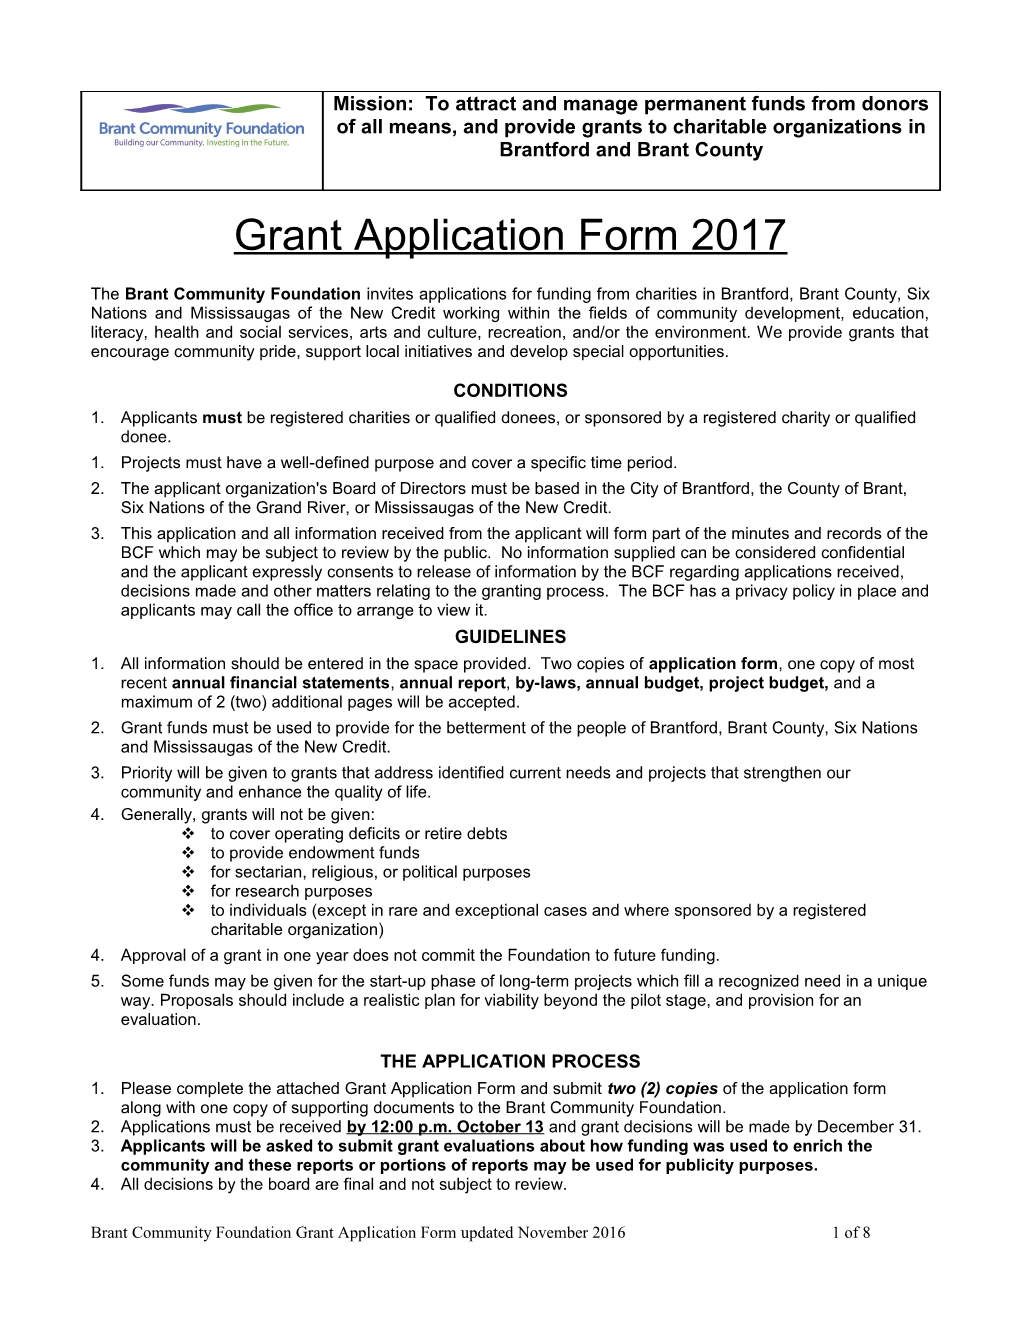 Grant Application Form2017